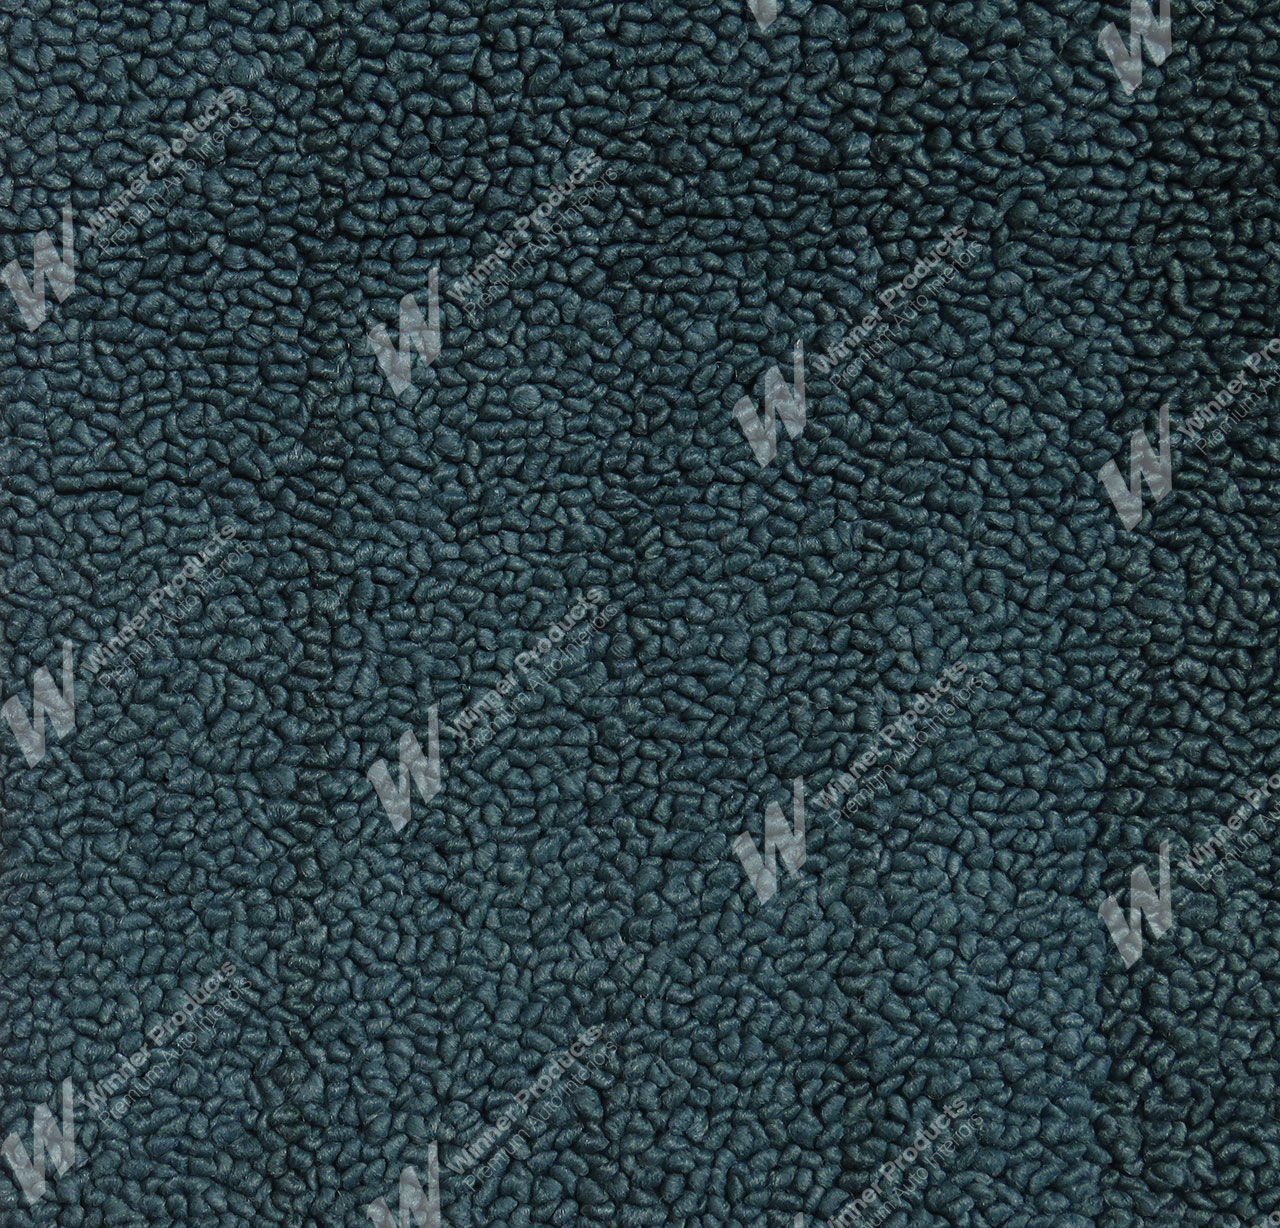 Holden Monaro HT Monaro Coupe 13X Turquoise Mist Carpet (Image 1 of 1)